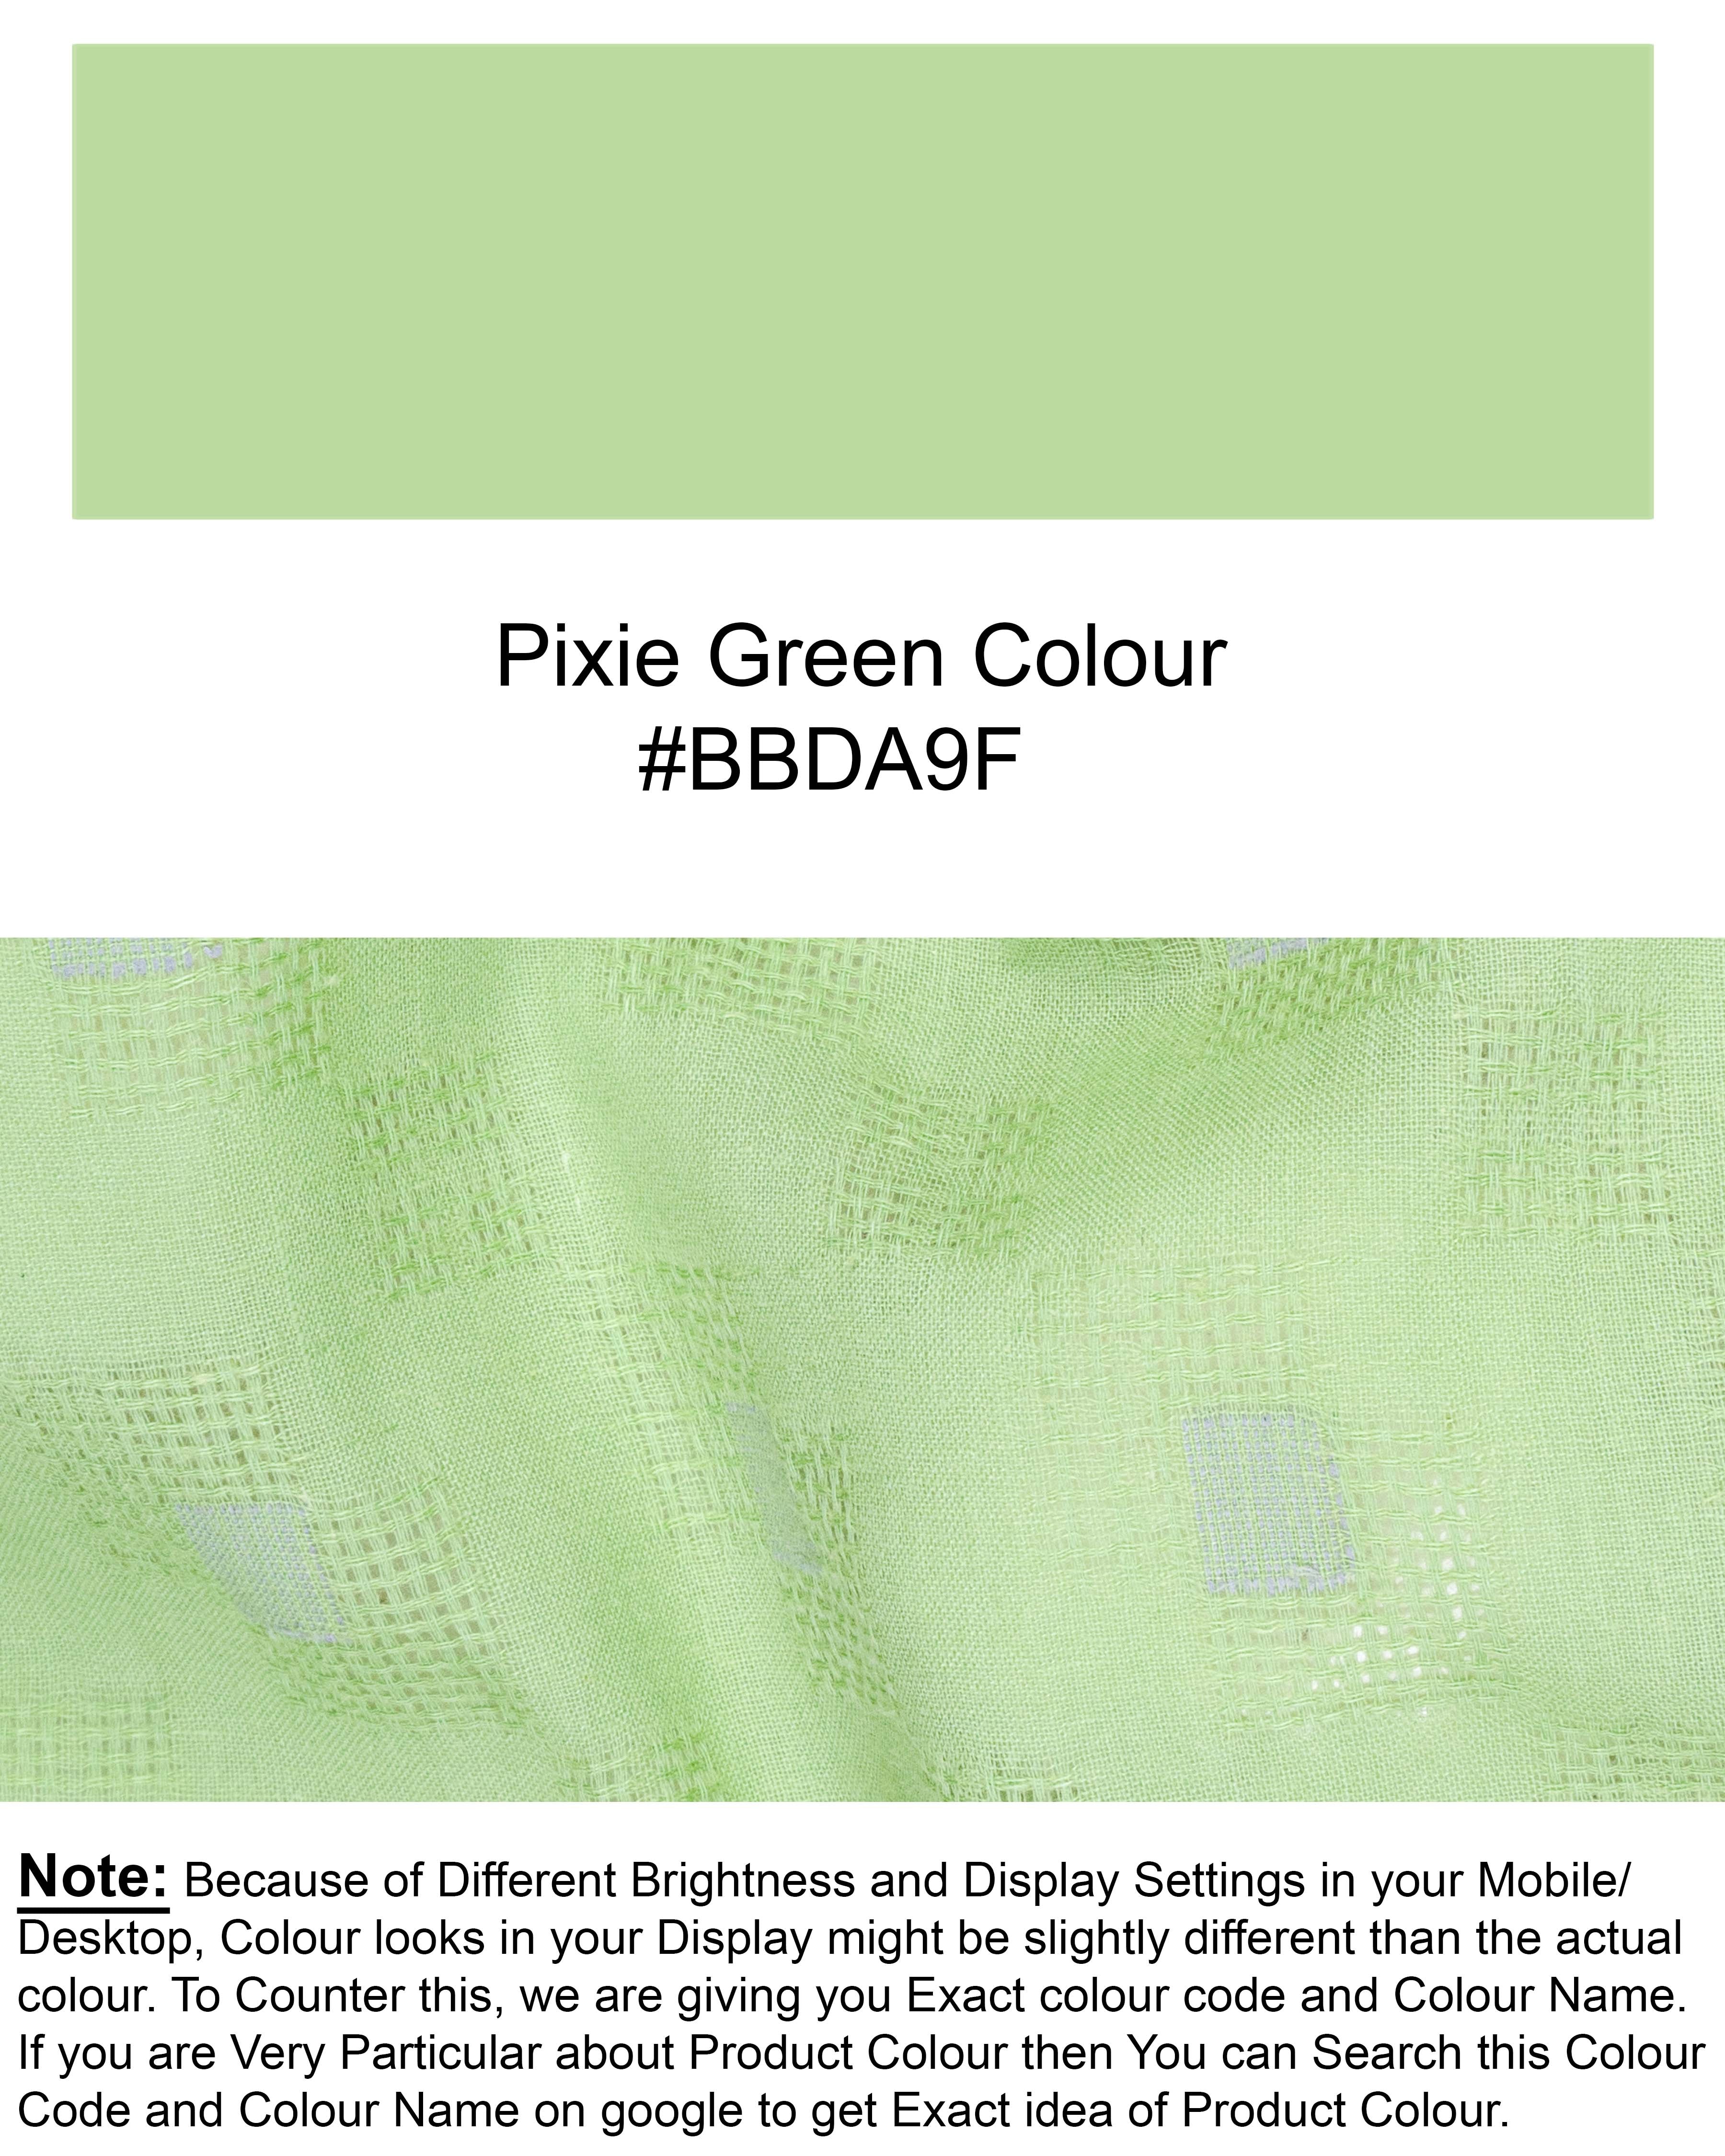 Pixie Green Geometric Dobby Textured Premium Giza Cotton Kurta KT001-39, KT001-40, KT001-42, KT001-44, KT001-46